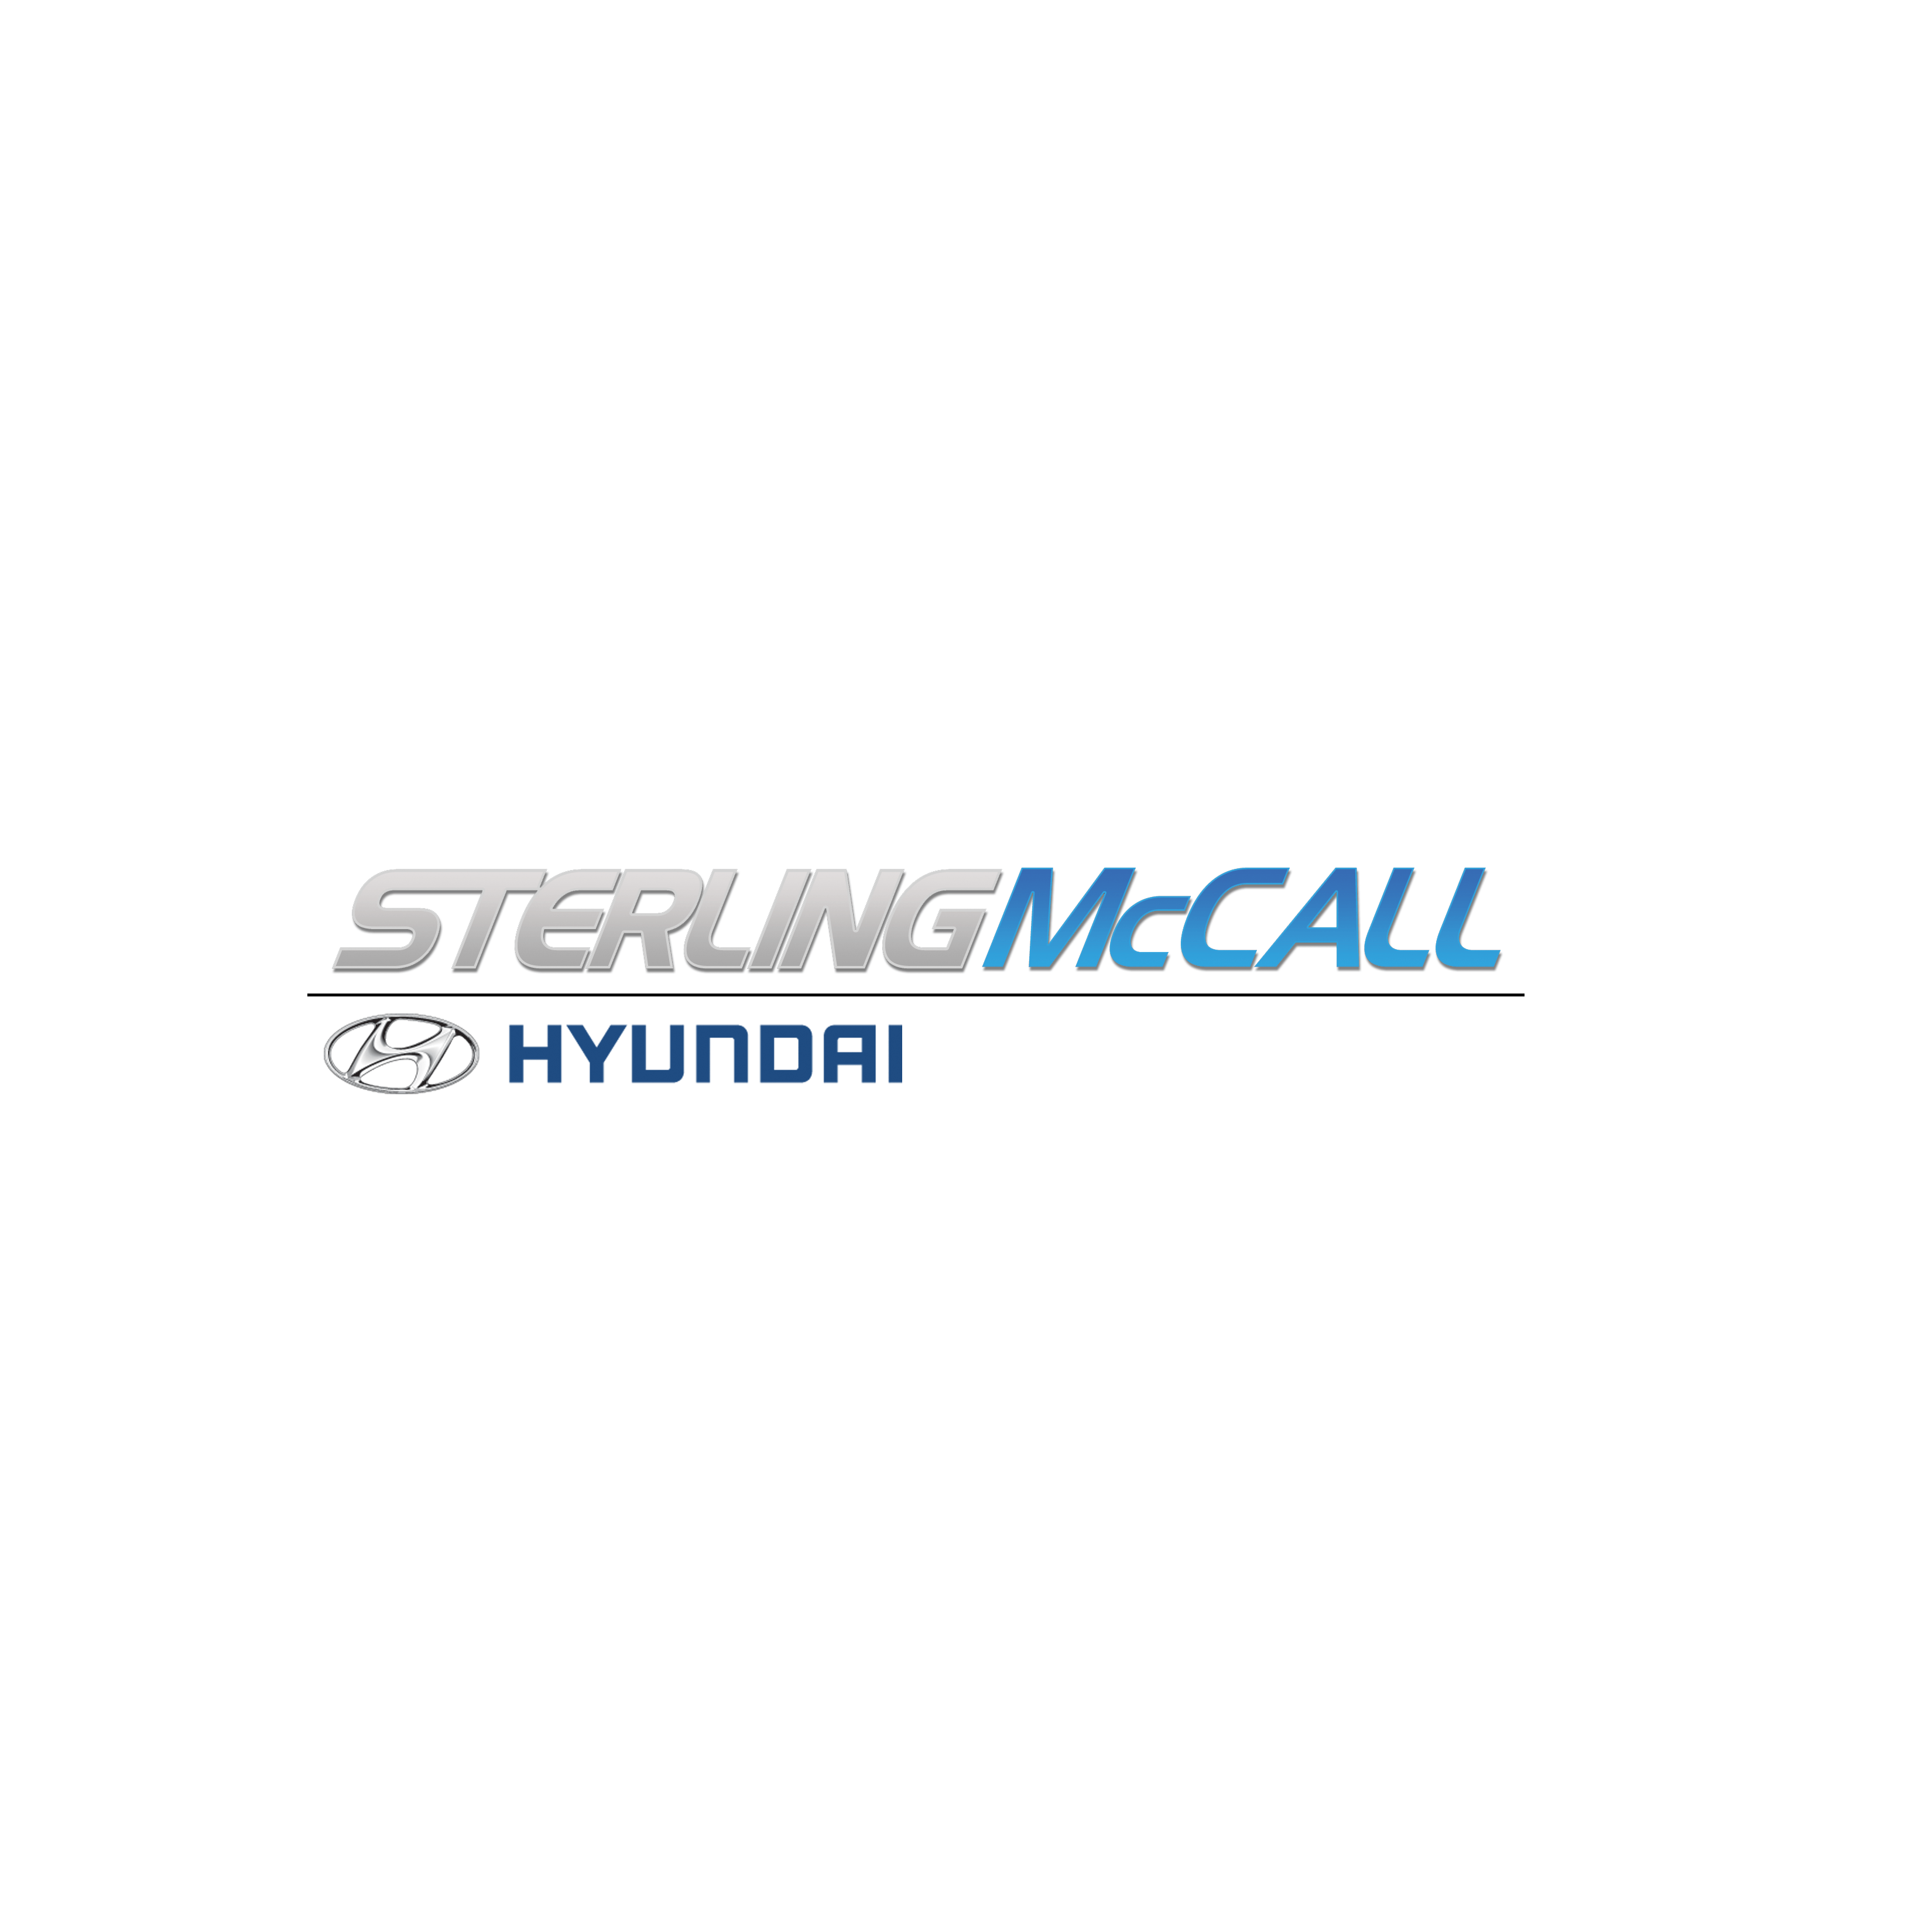 McCall Logo - Sterling McCall Hyundai 10505 Southwest Freeway Houston, TX Auto